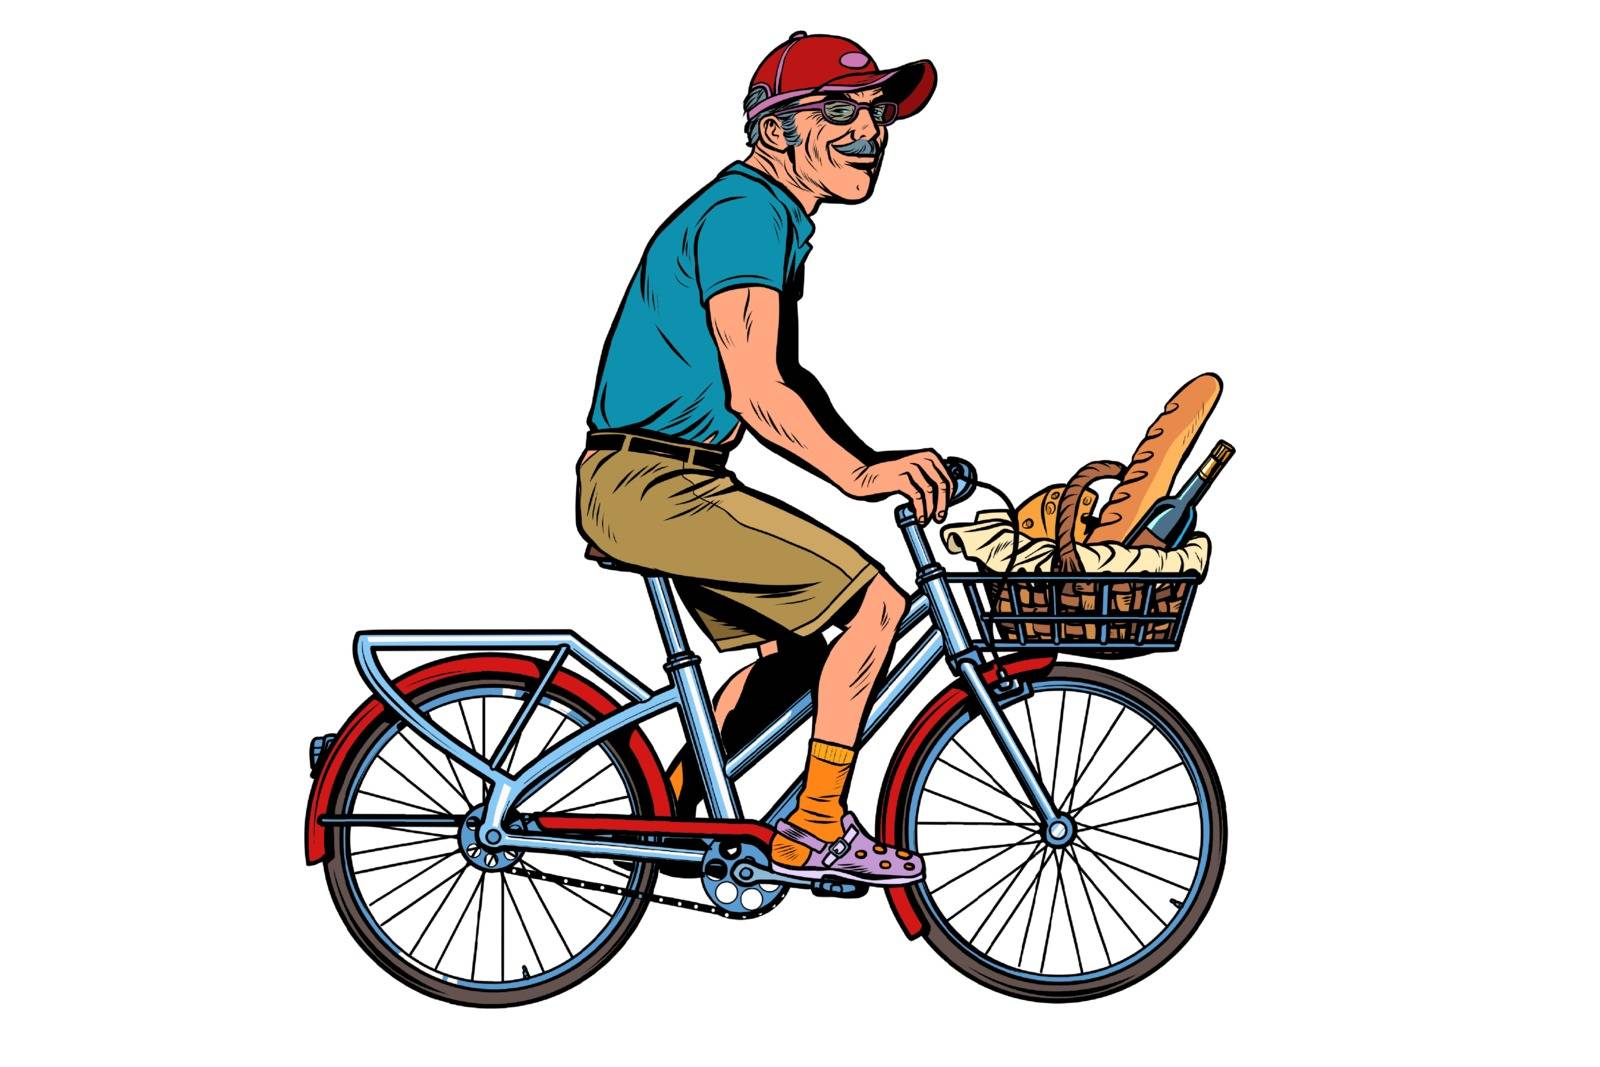 old man on bike with shopping food. Pop art retro vector illustration vintage kitsch